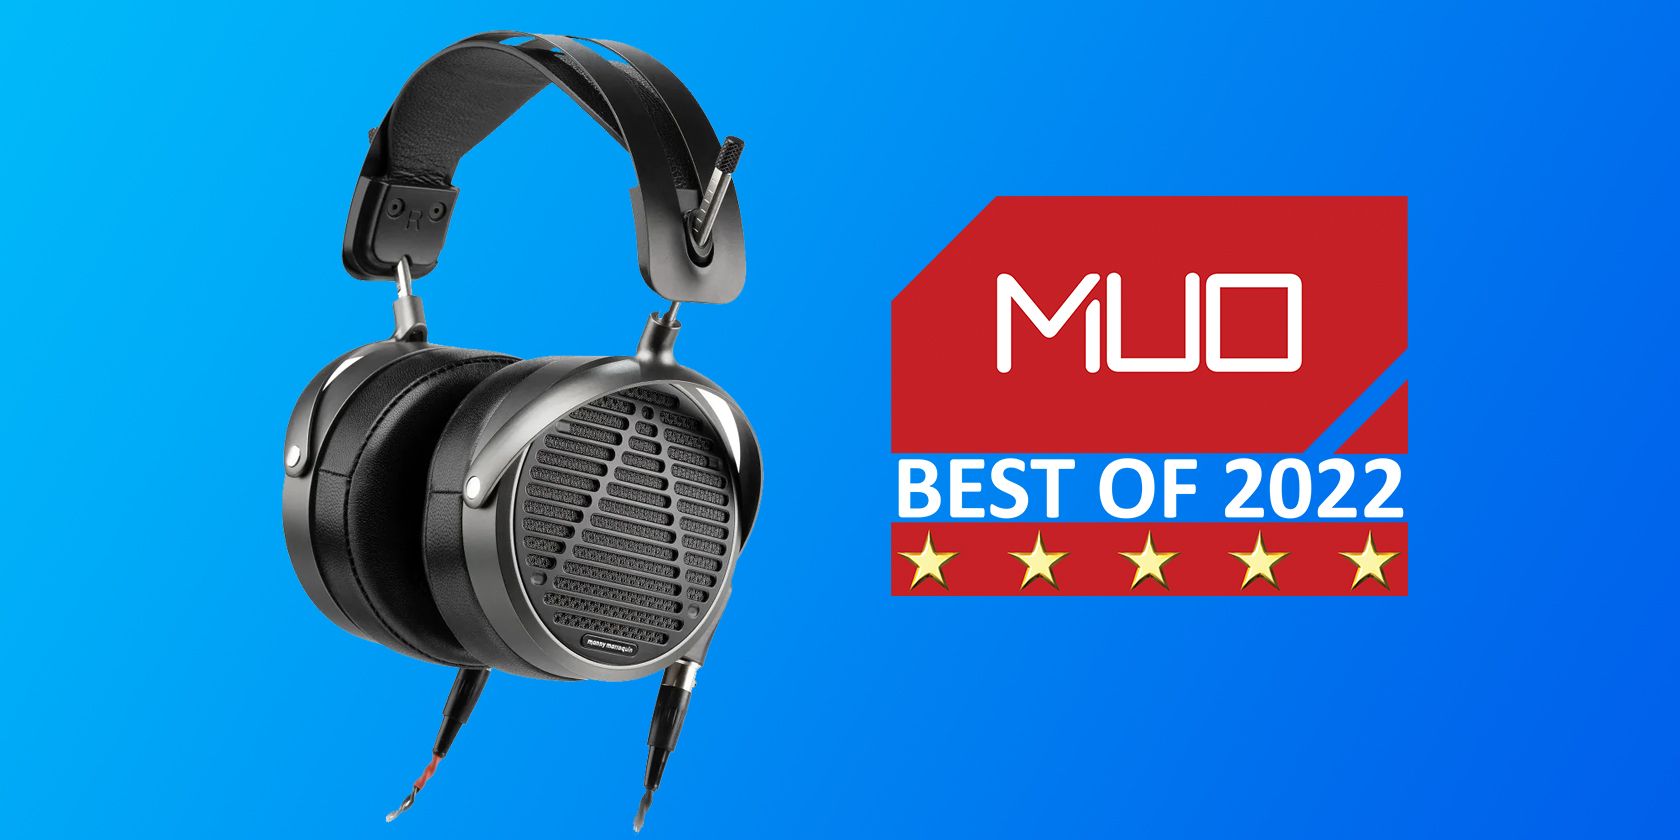 audeze mm-500 best wired headphones and award badge